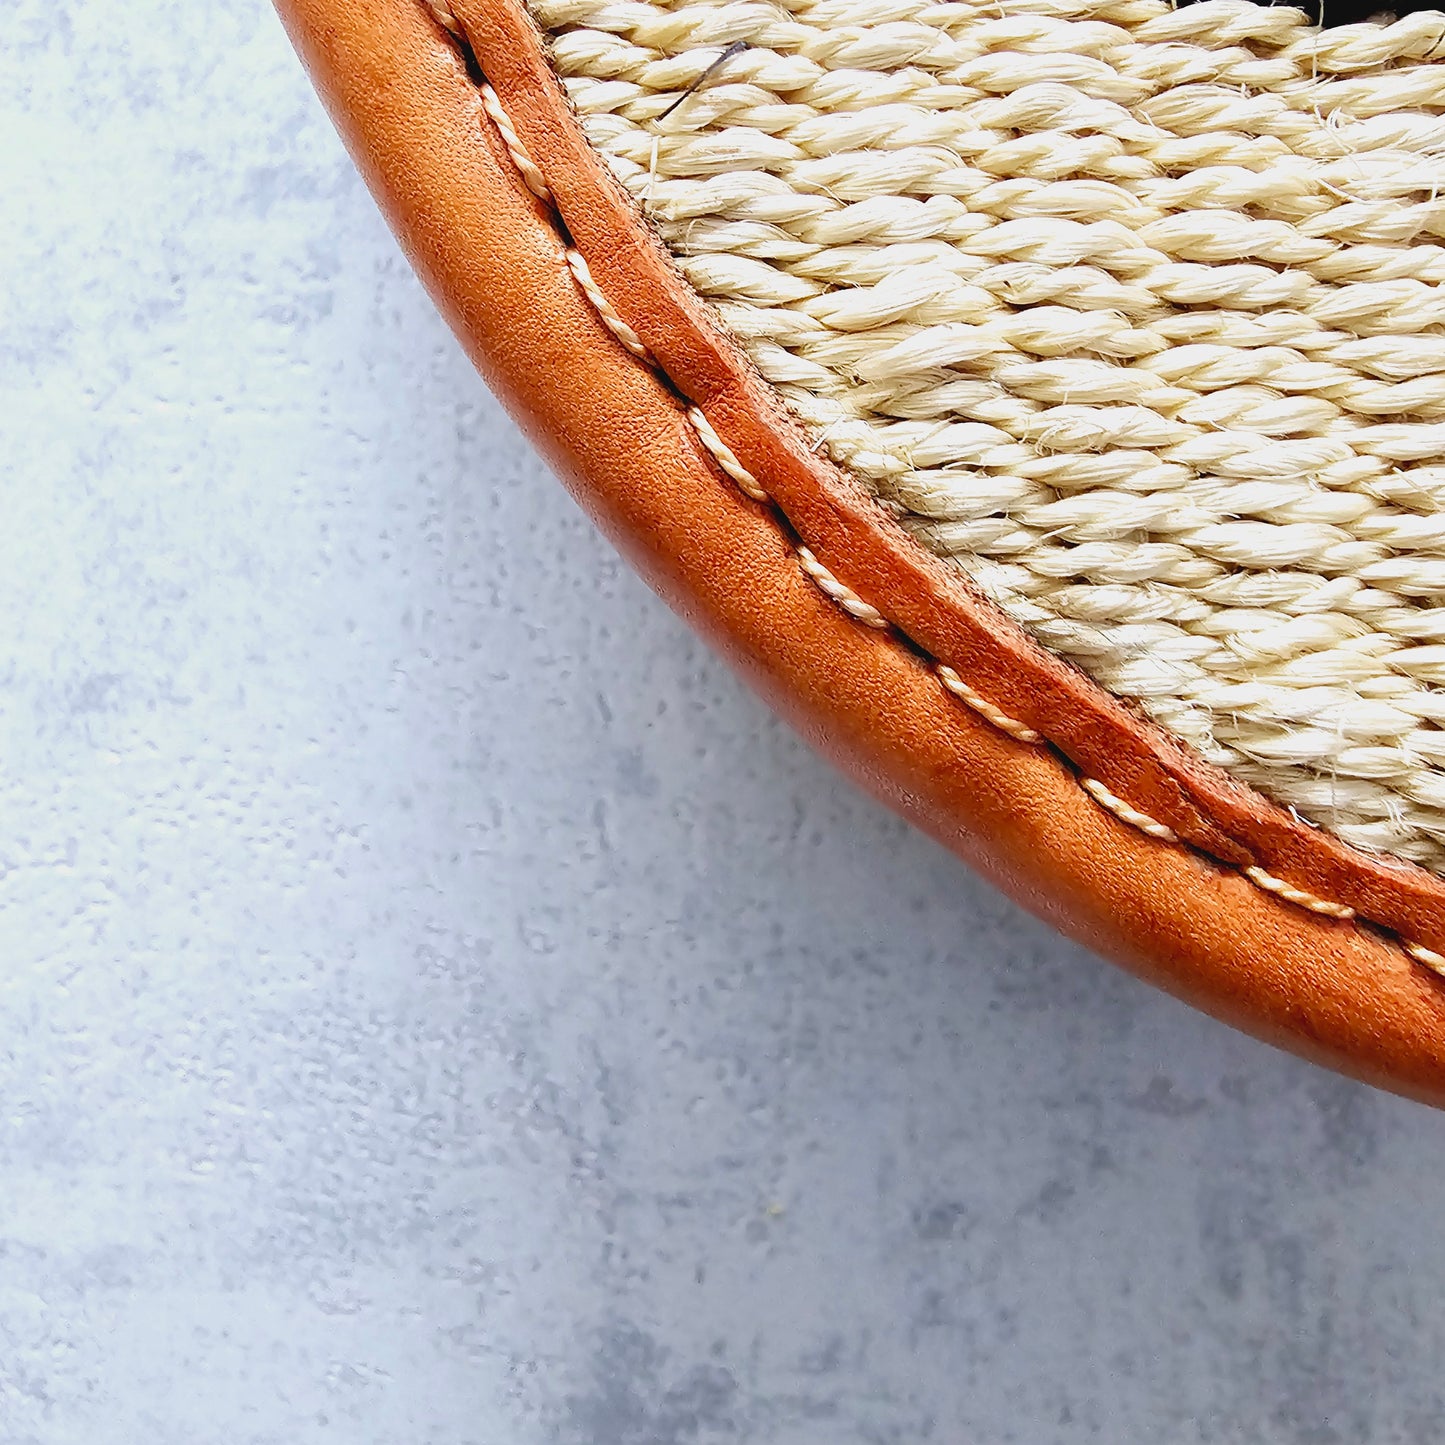 Handmade Sisal Handbag | Fully lined with an Adjustable Strap